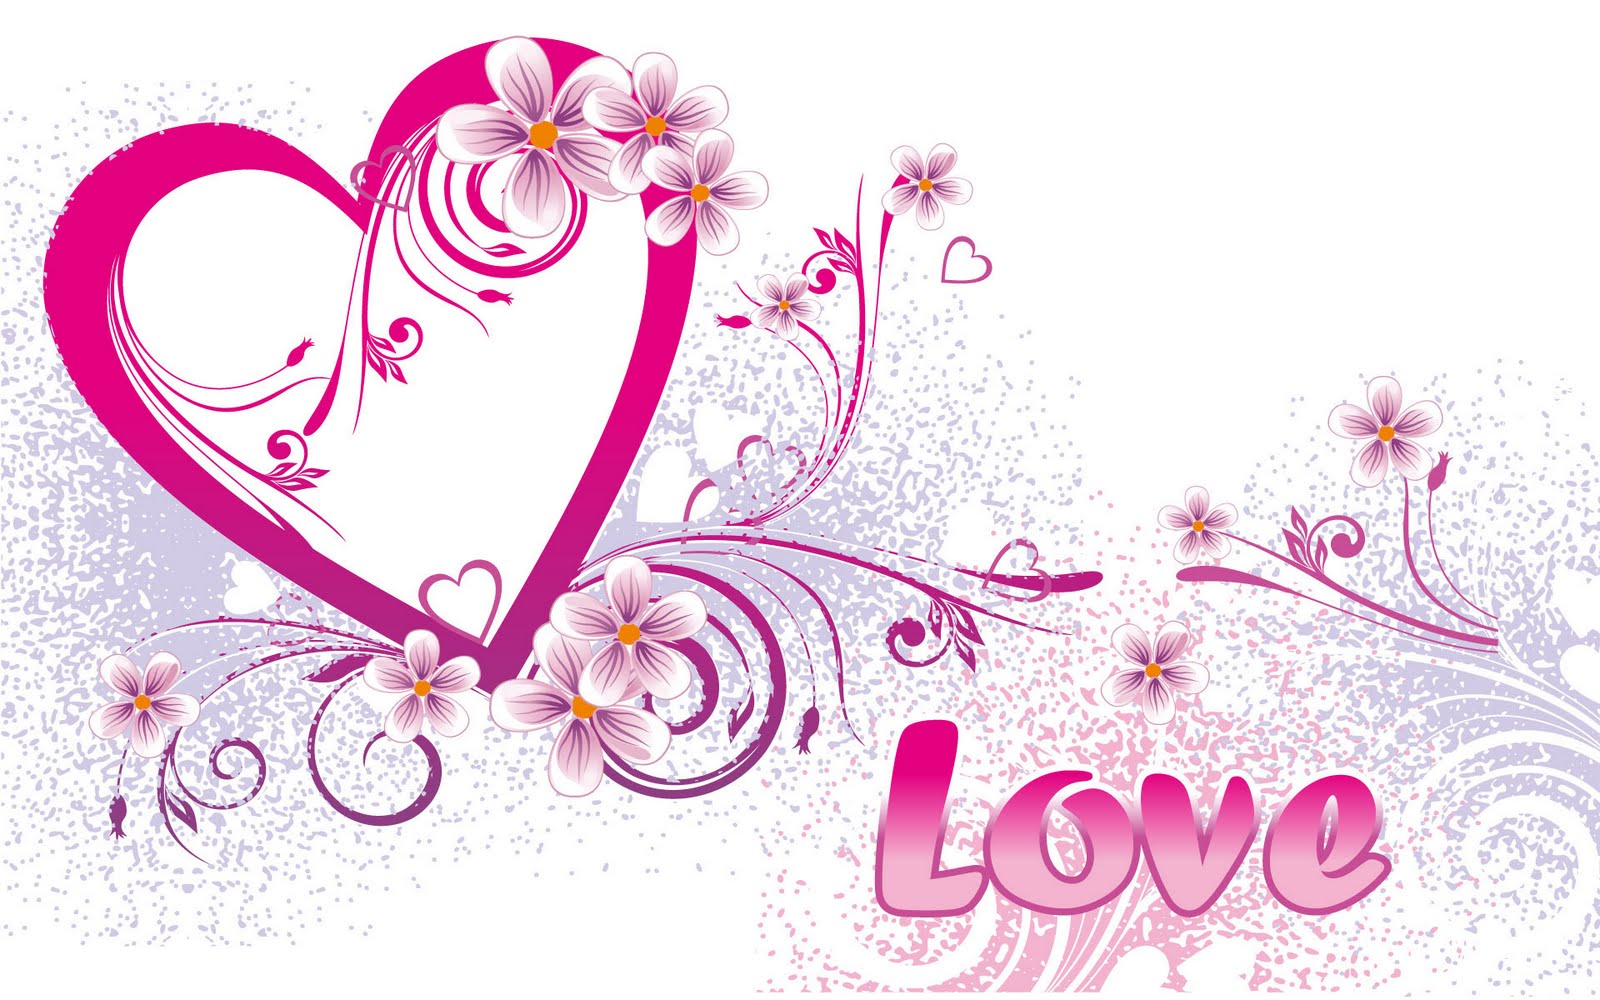 http://1.bp.blogspot.com/--BI_3xF5Z8c/Ti1rfoo7BlI/AAAAAAAAN2o/hI-k31mSkdA/s1600/Love-wallpaper-love-4187632-1920-1200.jpg